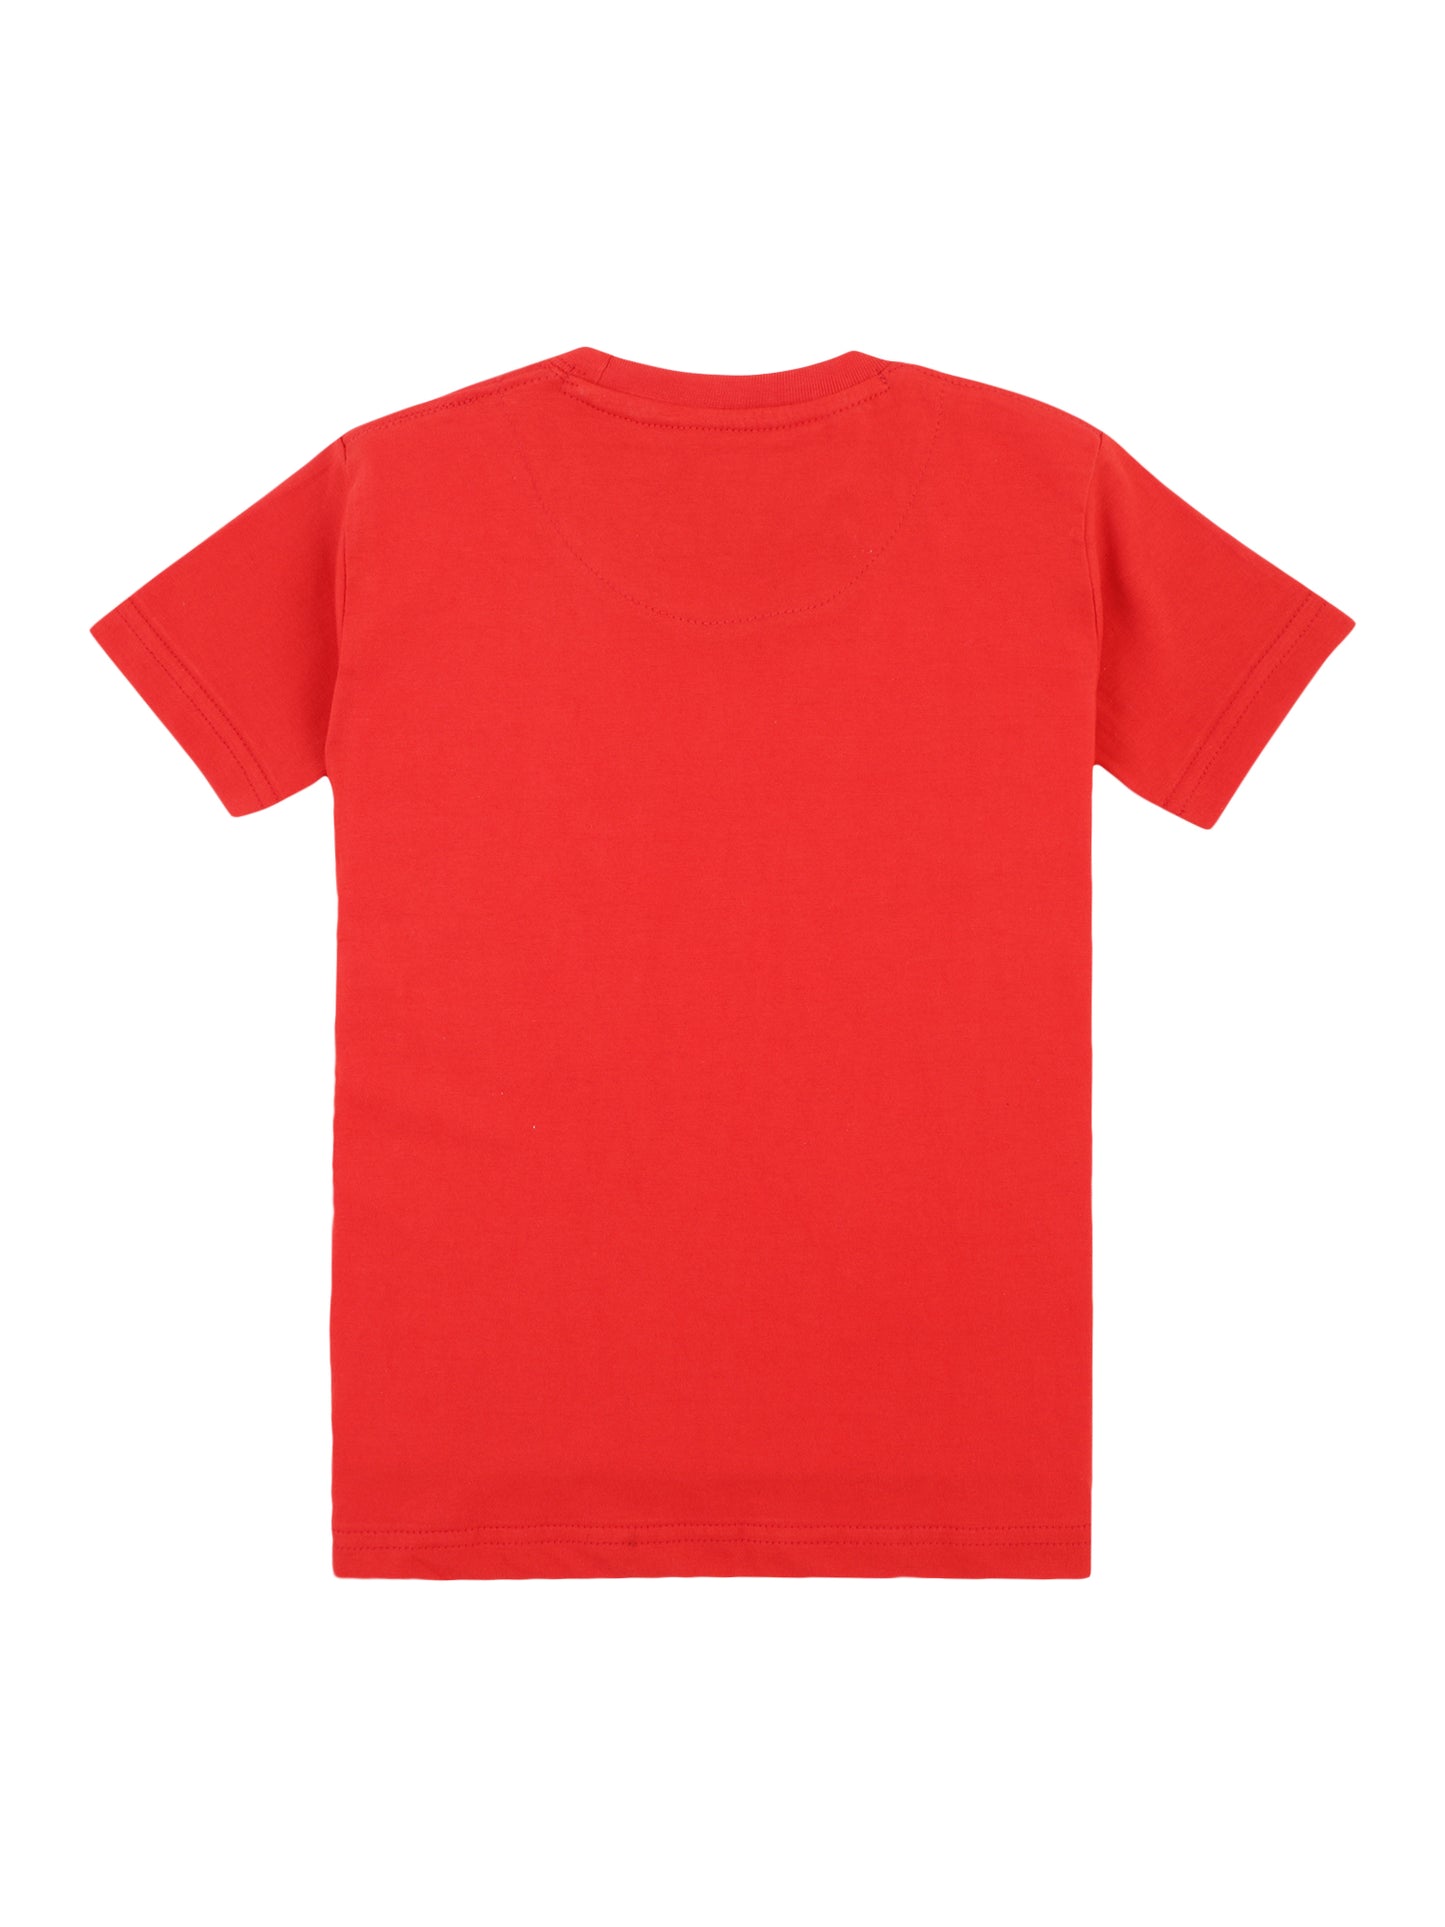 Kids Printed round neck red t-shirt